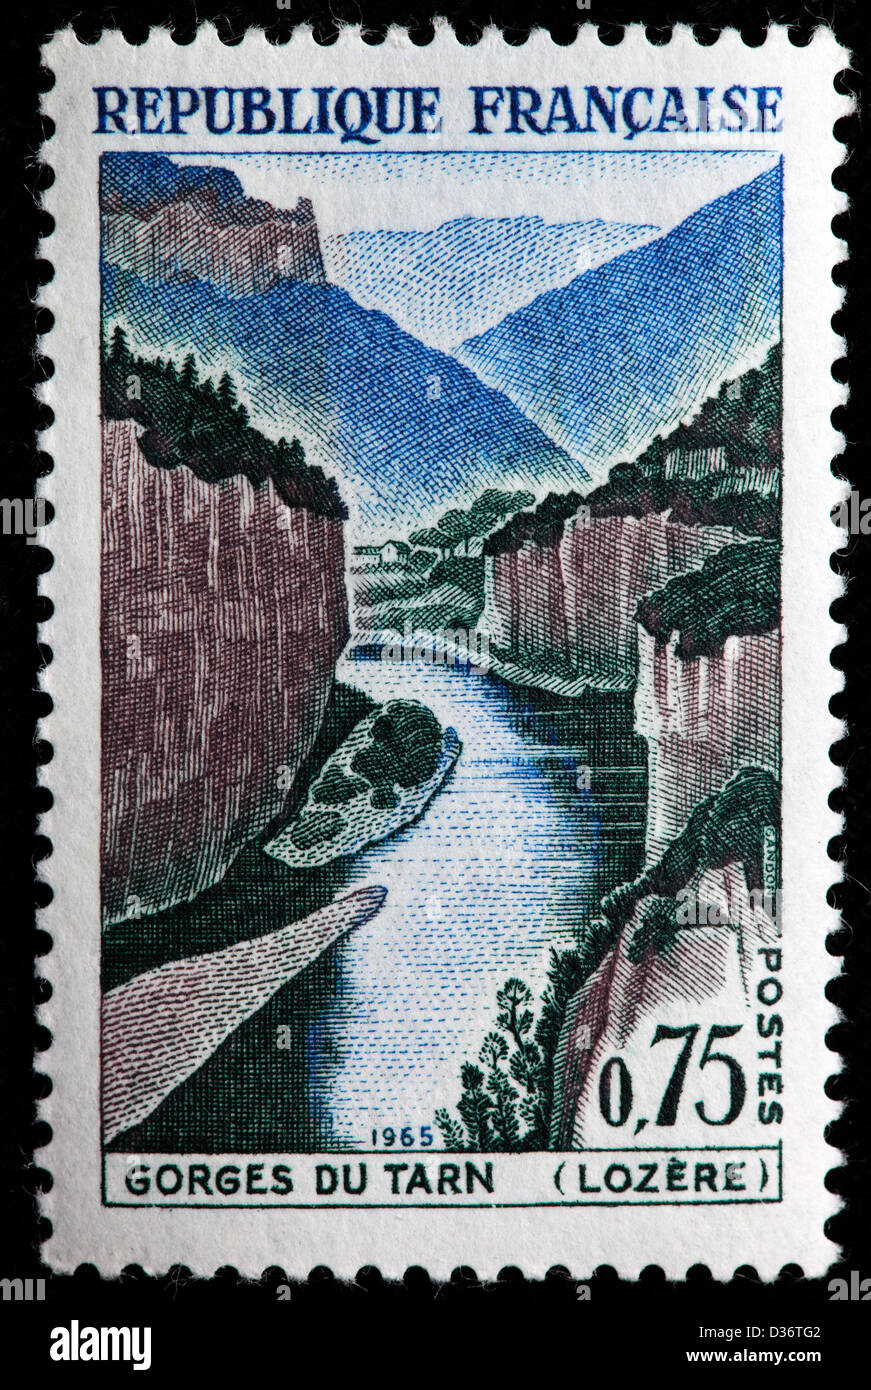 Tarn Gorge, Lozere mountains, postage stamp, France, 1965 Stock Photo